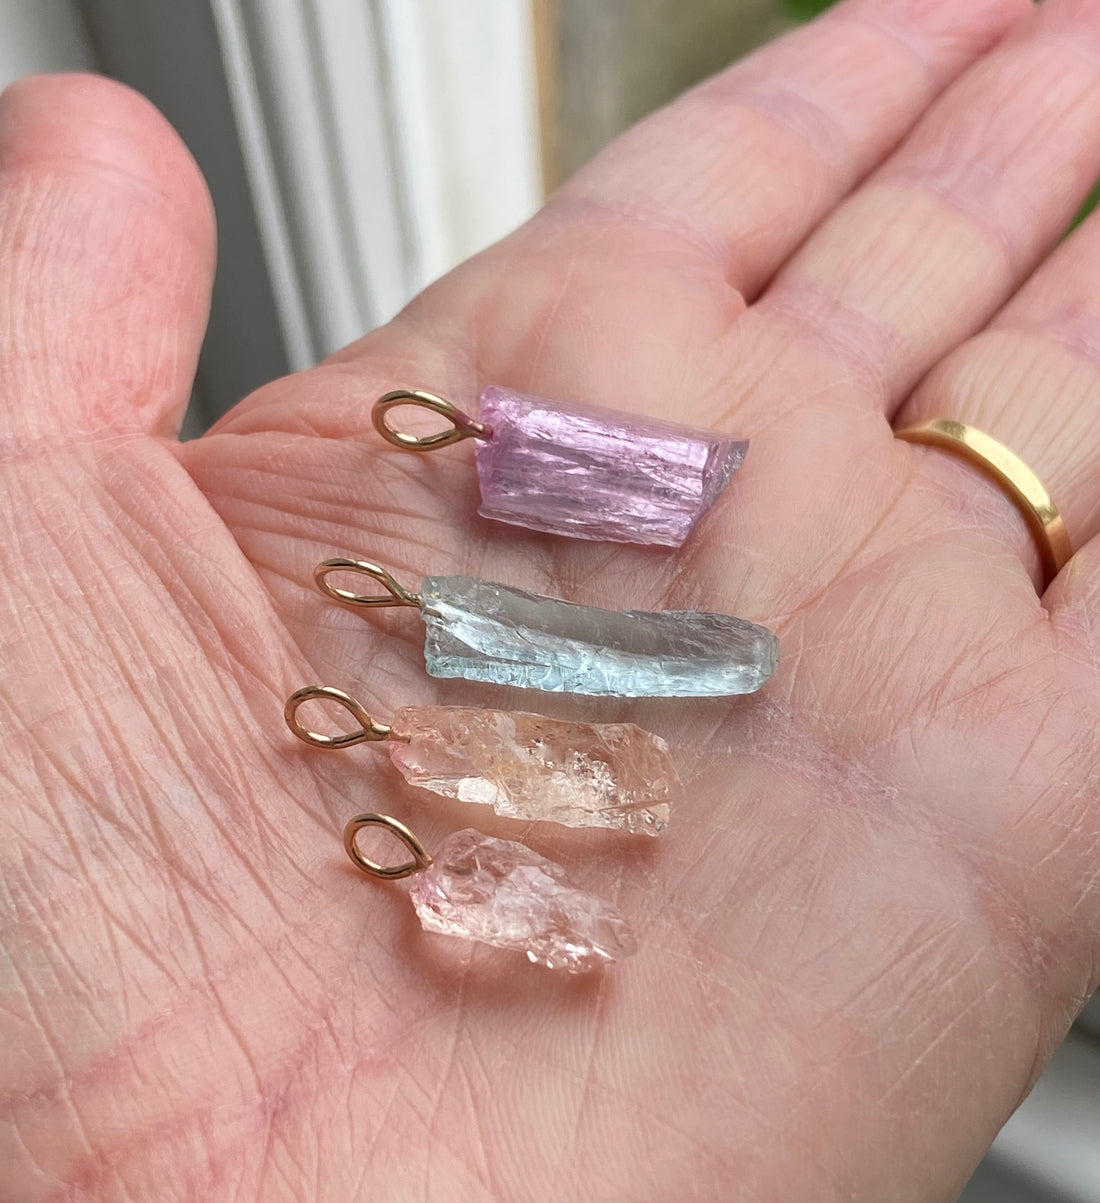 Raw Kunzite Crystal Pendant Necklace